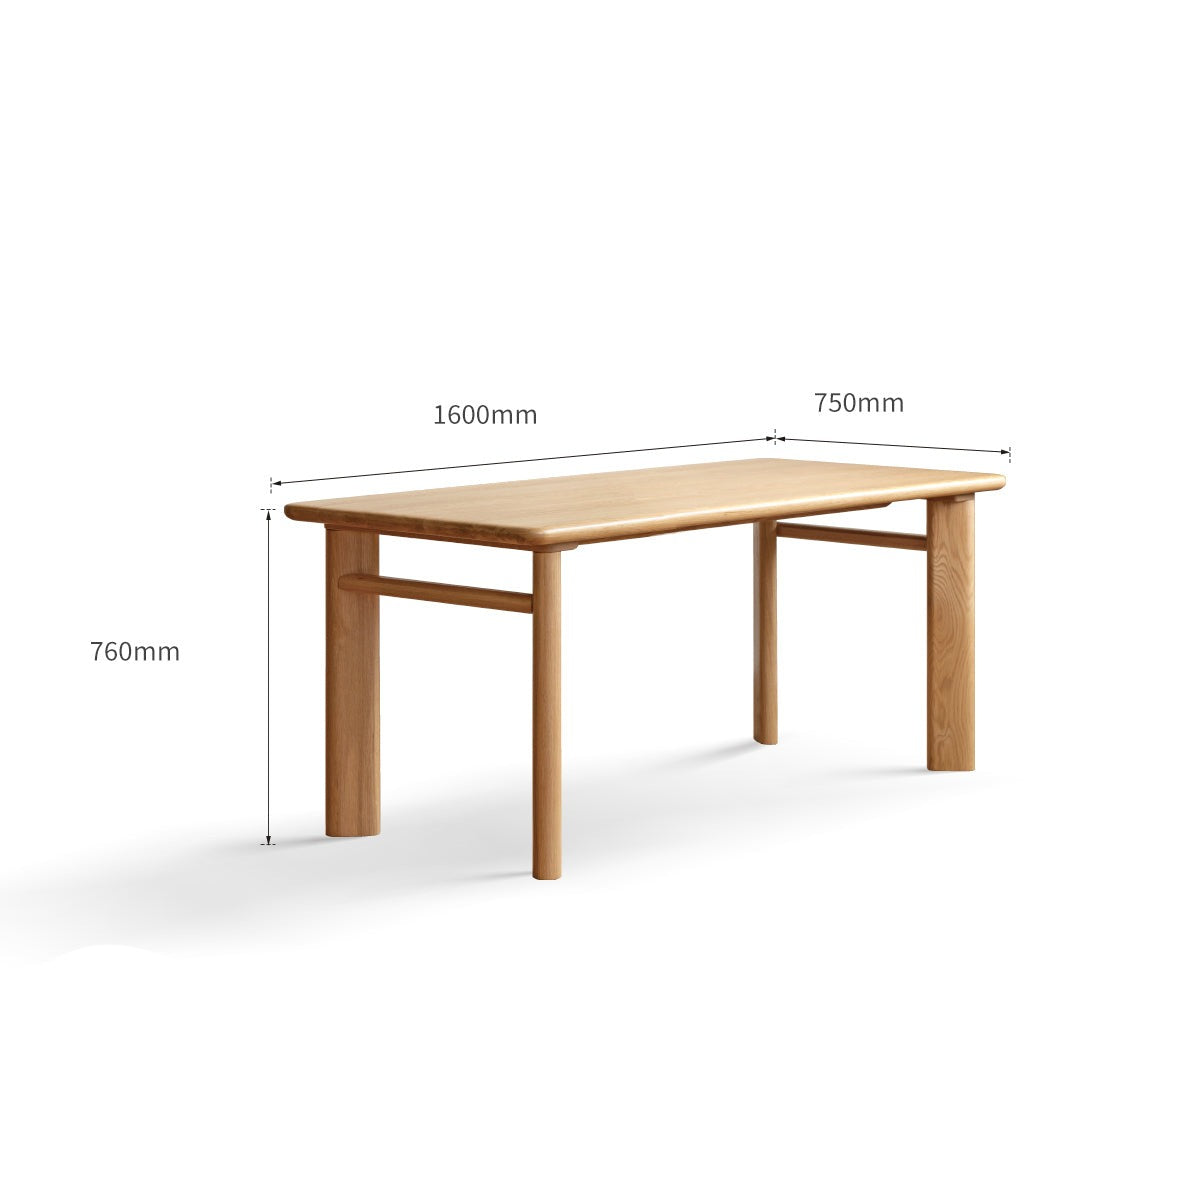 Oak Solid Wood Large Size Office Desk -